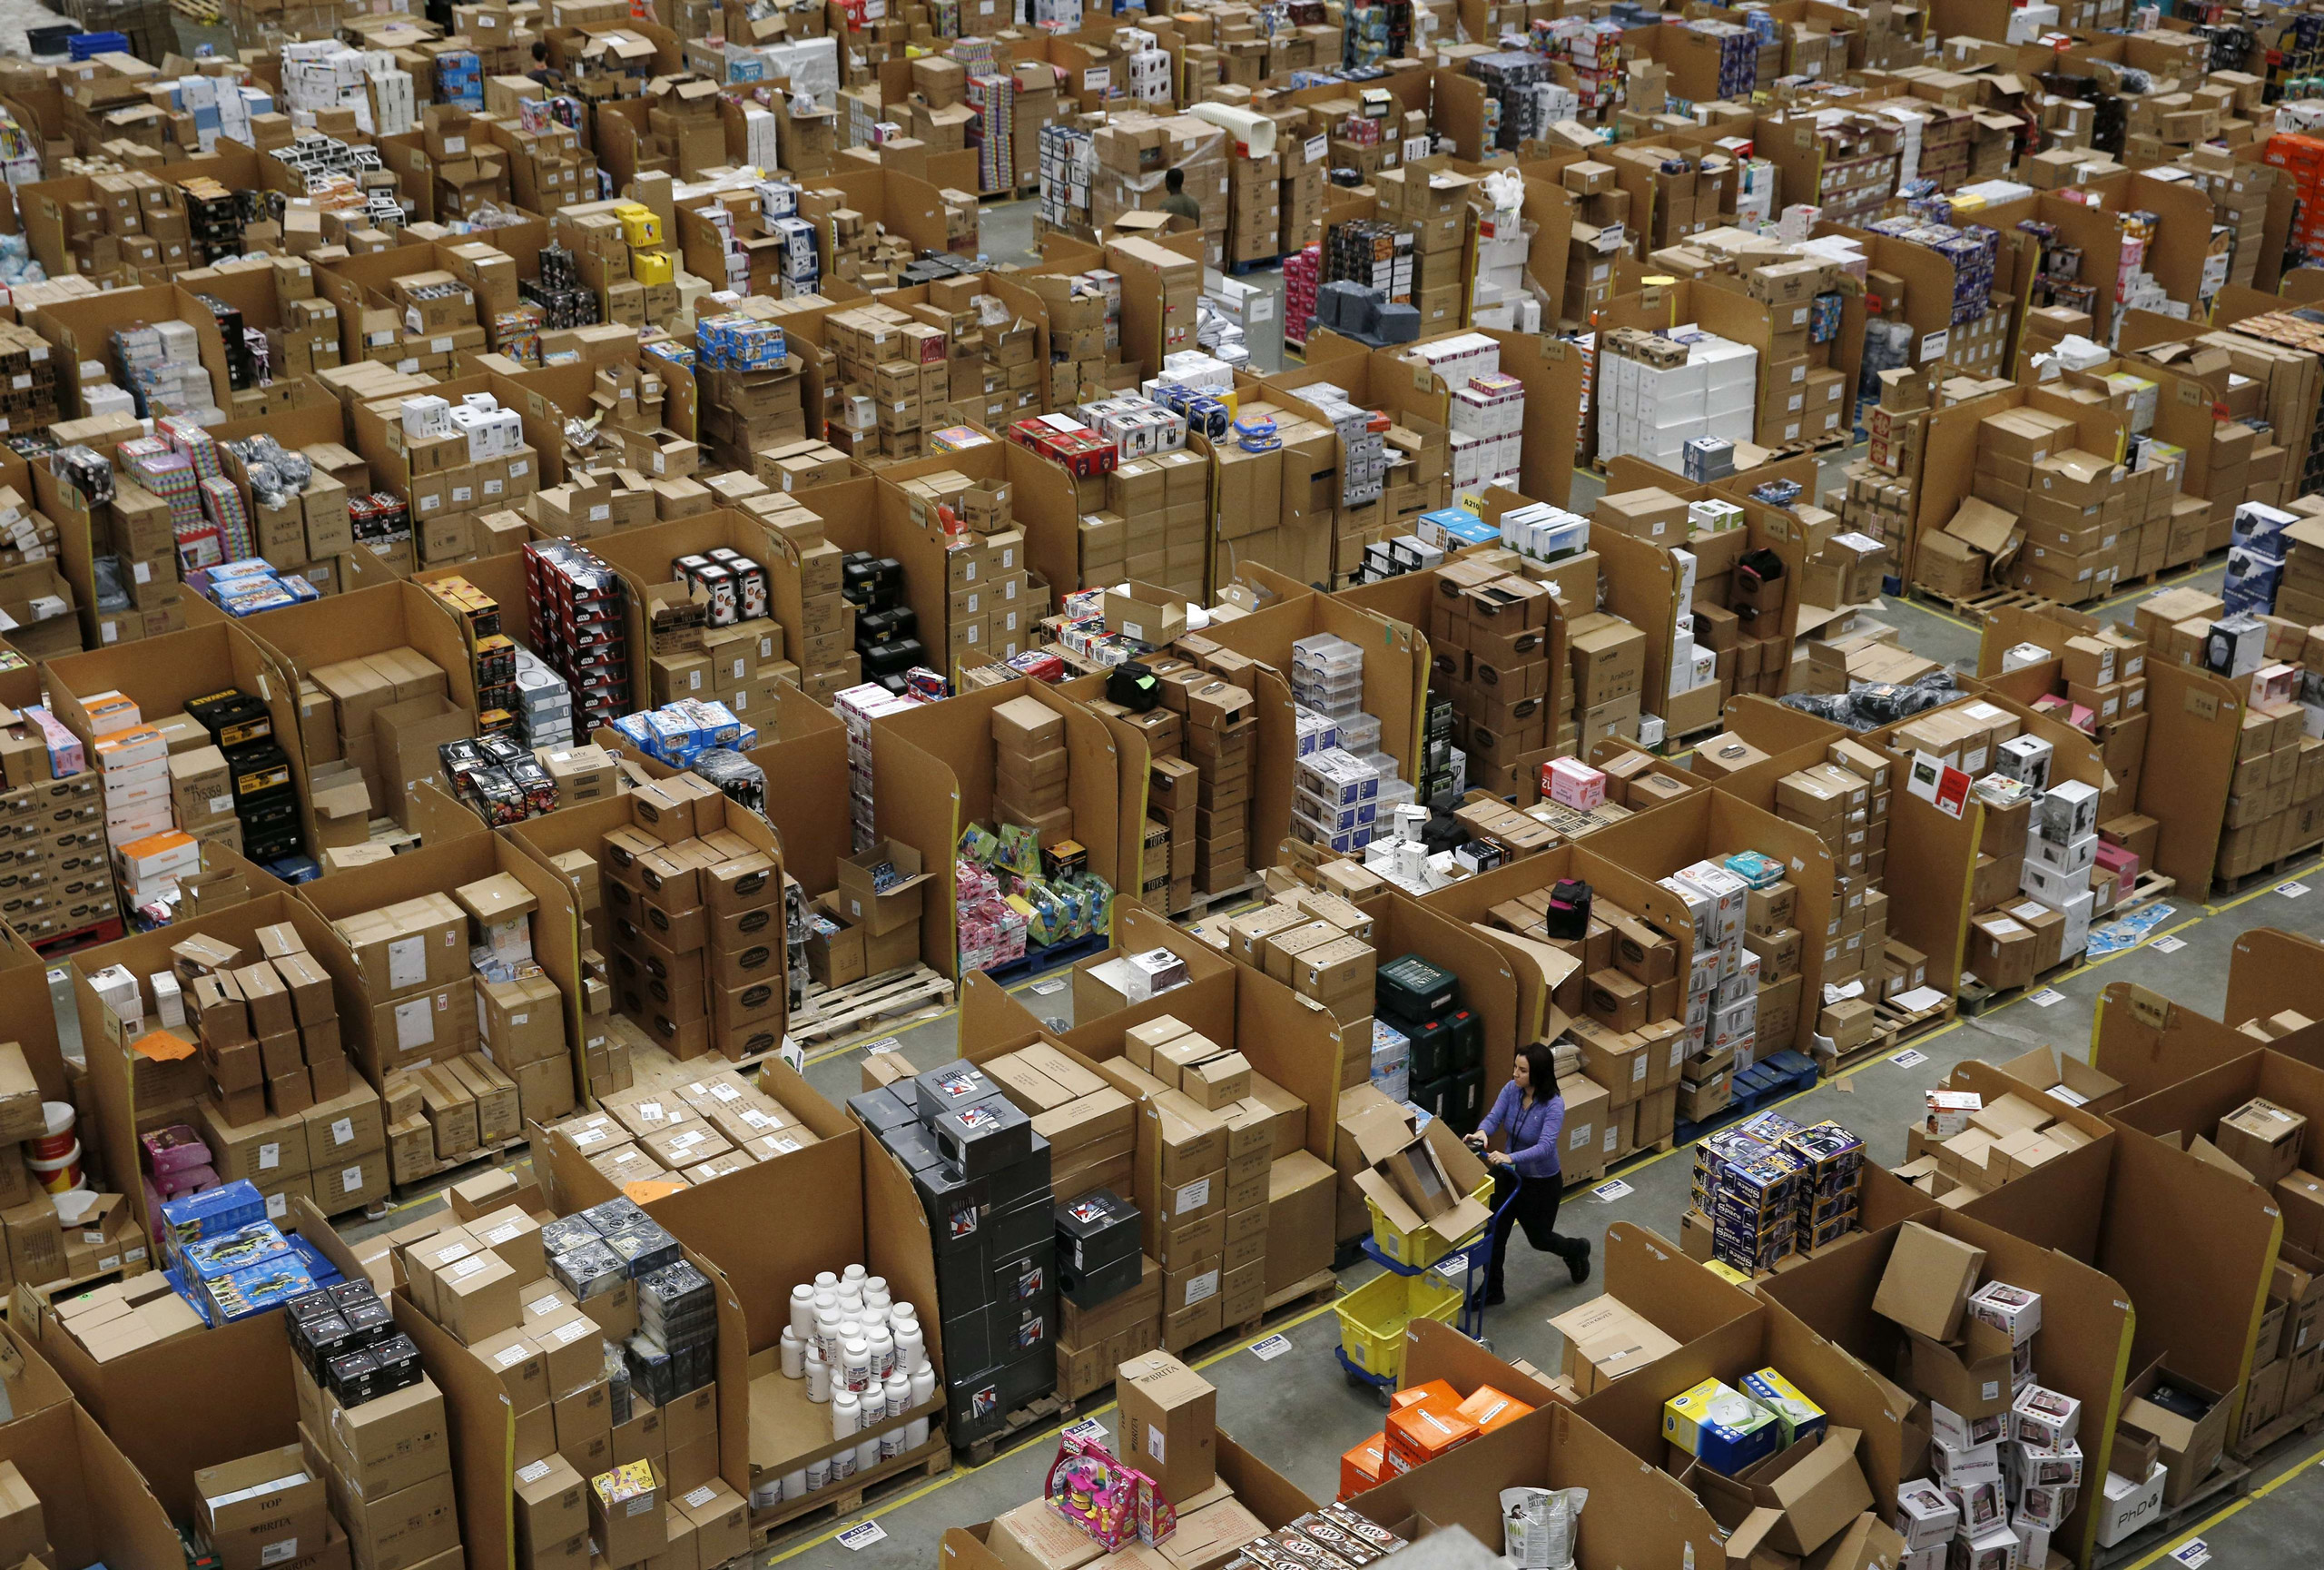 Workers walk along aisles of goods stored inside an Amazon.co.uk fulfillment centre in Hemel Hempstead,U.K., on Nov. 25, 2015. (Adrian Dennis&mdash;AFP/Getty Images)